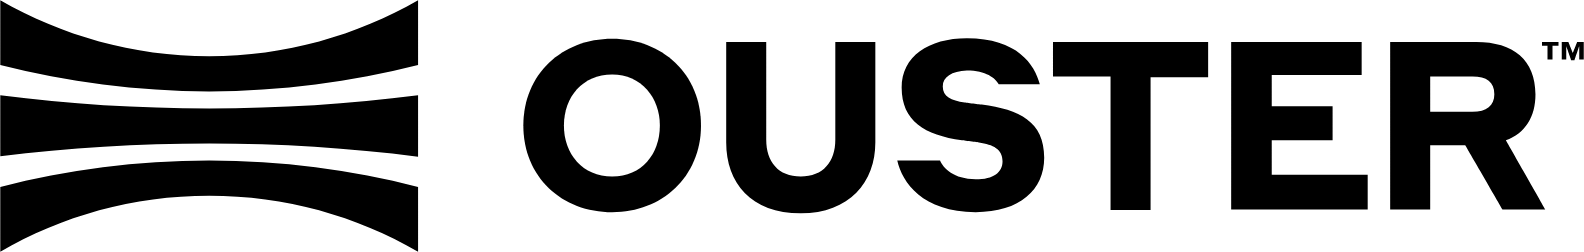 Ouster logo large (transparent PNG)